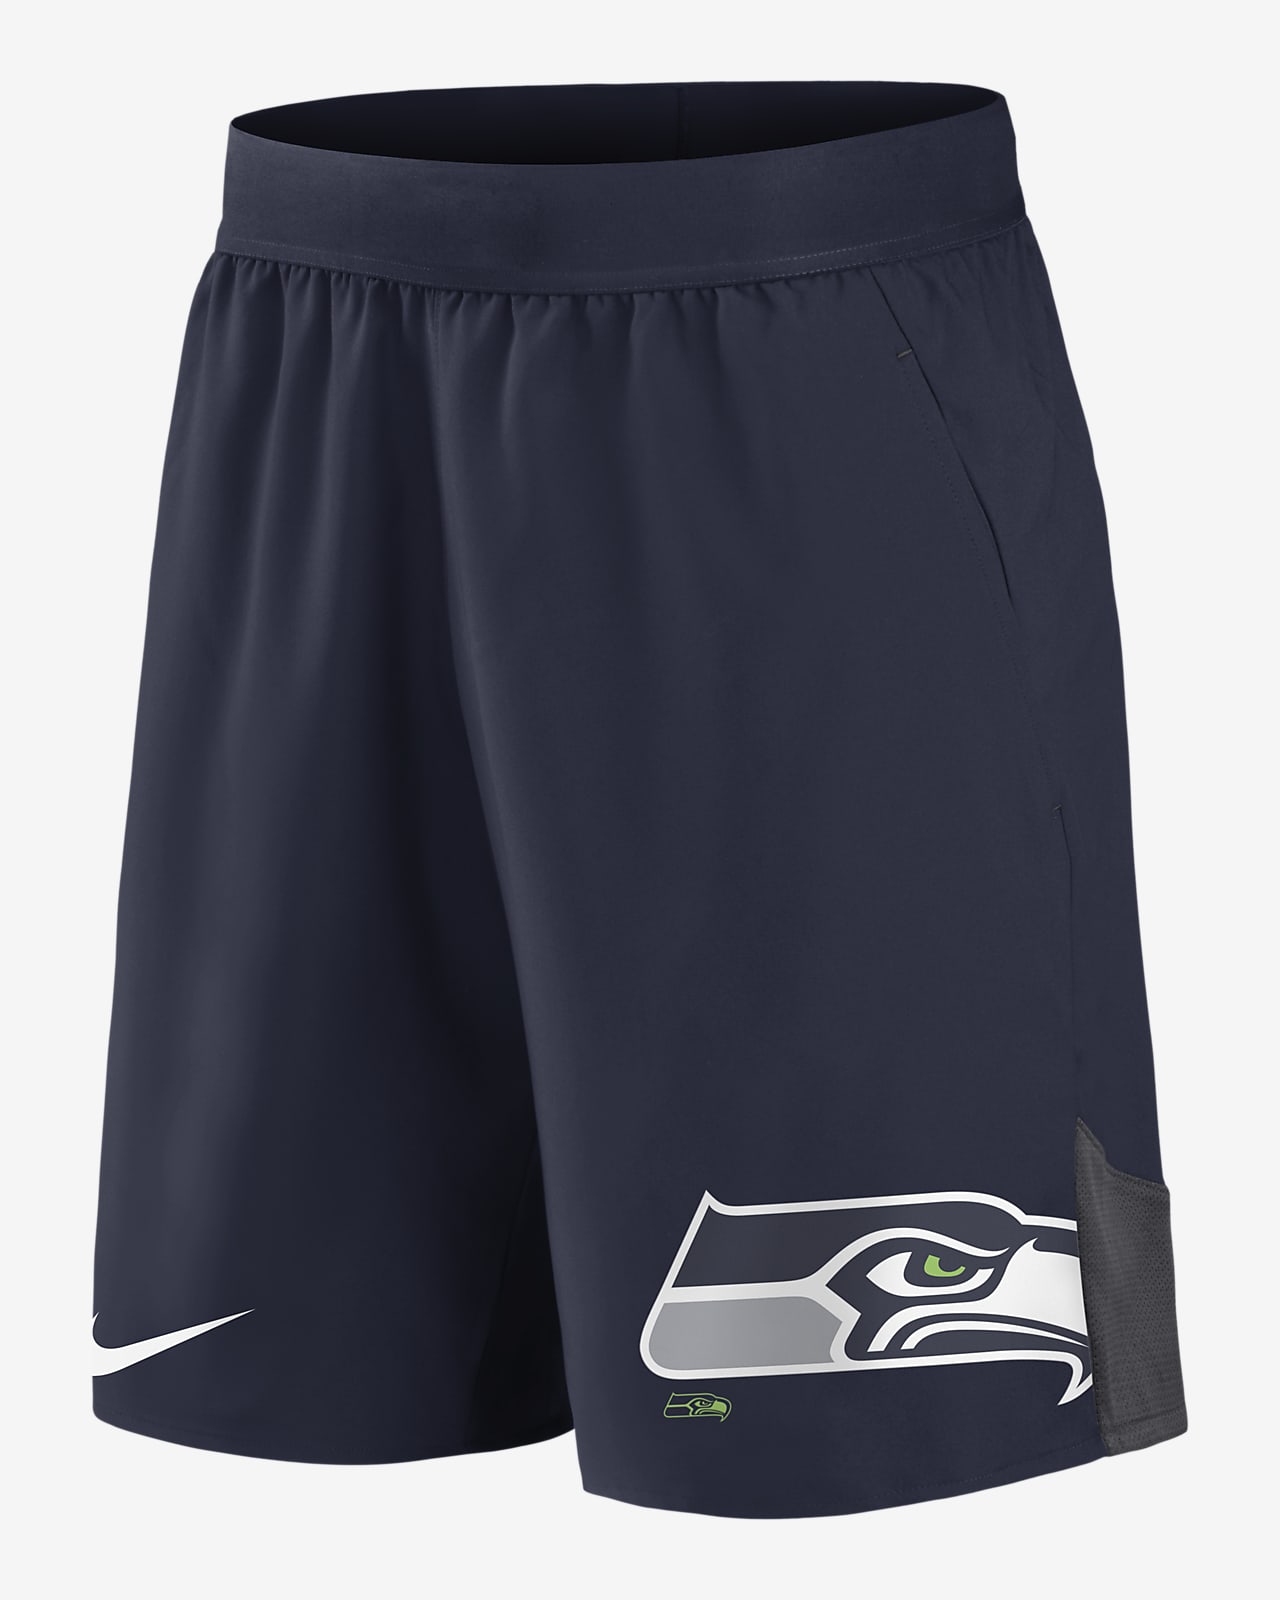 Nike Dri-FIT Stretch (NFL Seattle Seahawks) Men's Shorts